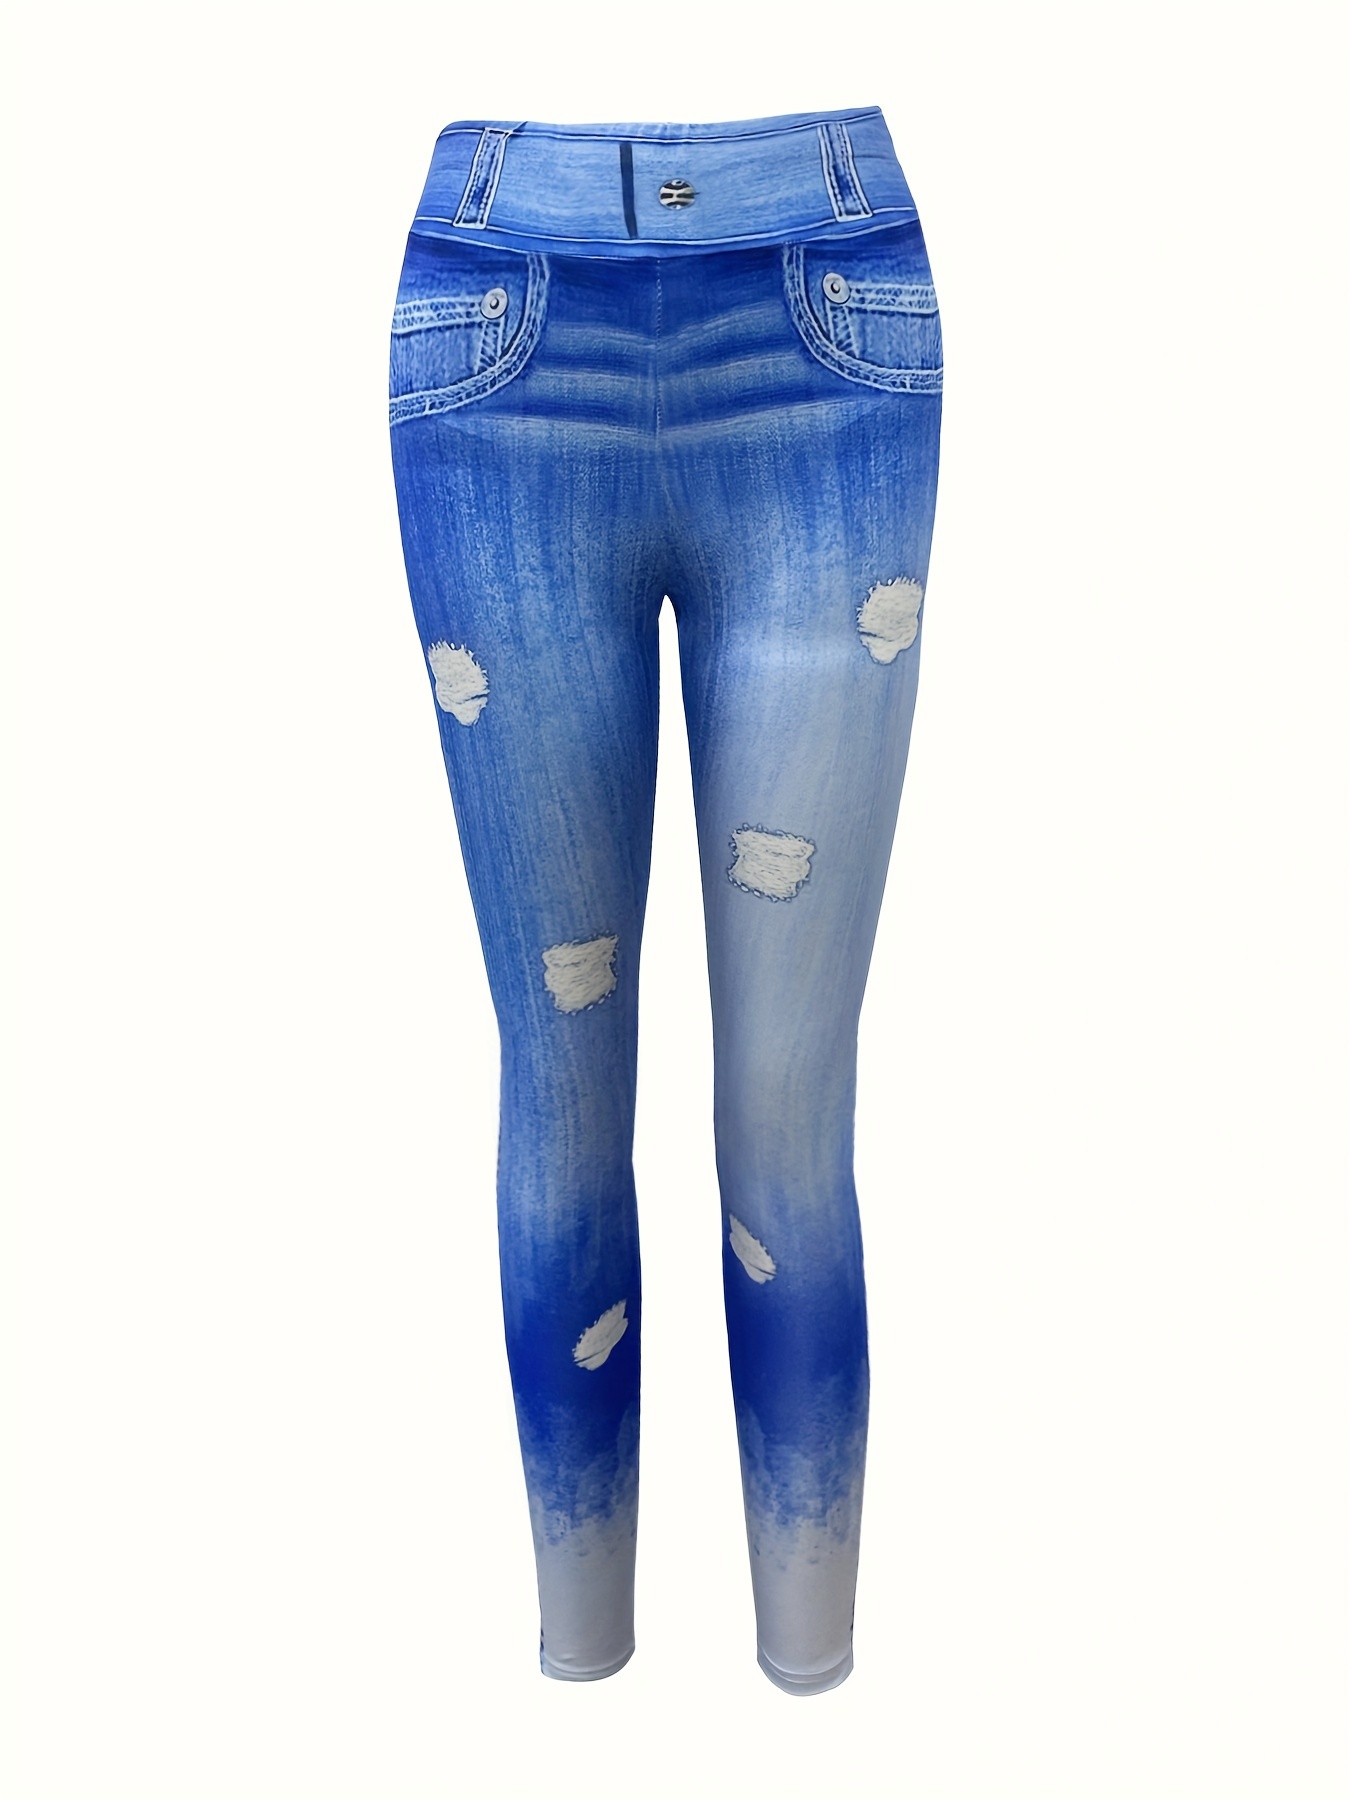 Fashnice Women Fake Jeans High Waist Denim Print Leggings Butt Lifting Look  Jeggings Stretch Sport Bottoms Light Blue XS